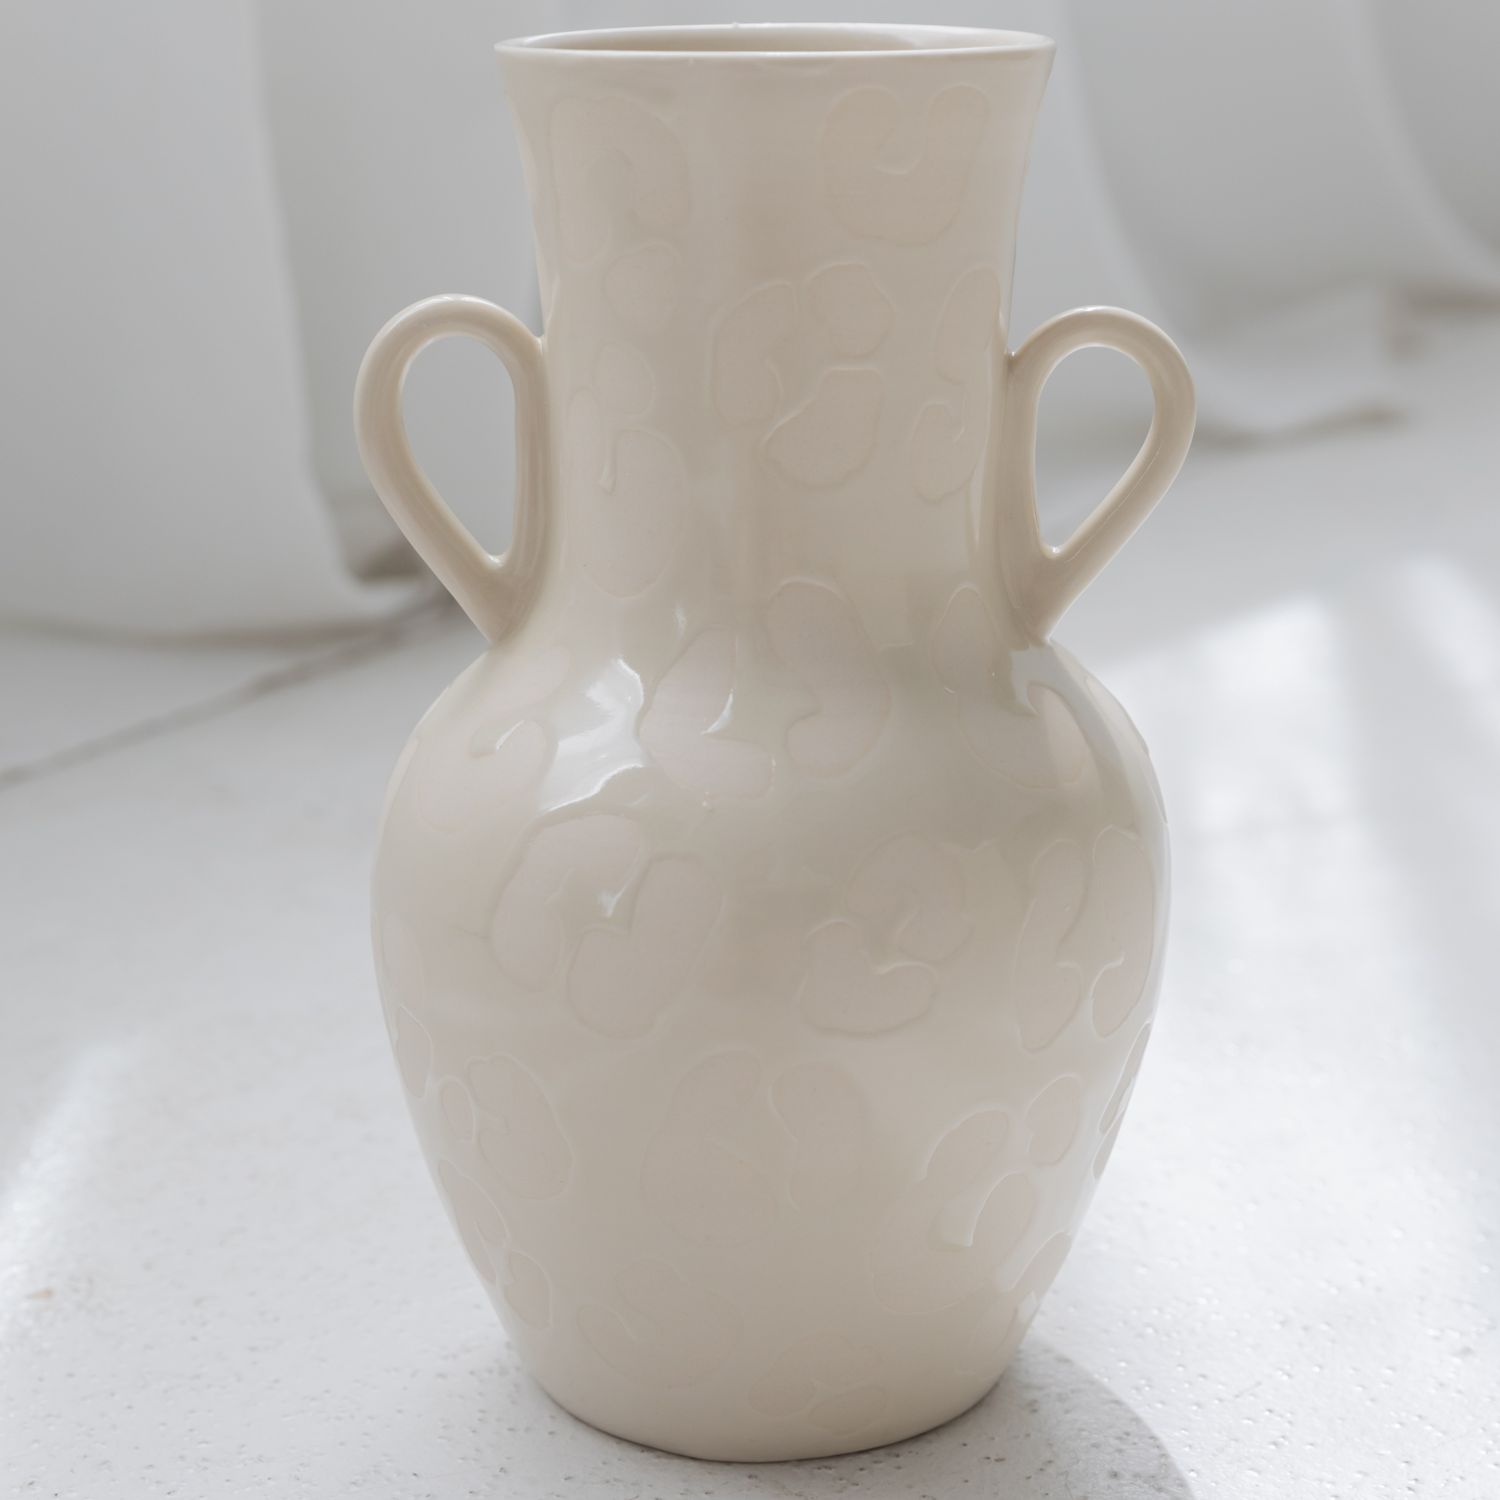 Mima Ceramics: White Print Vessel no. 1 Product Image 1 of 3